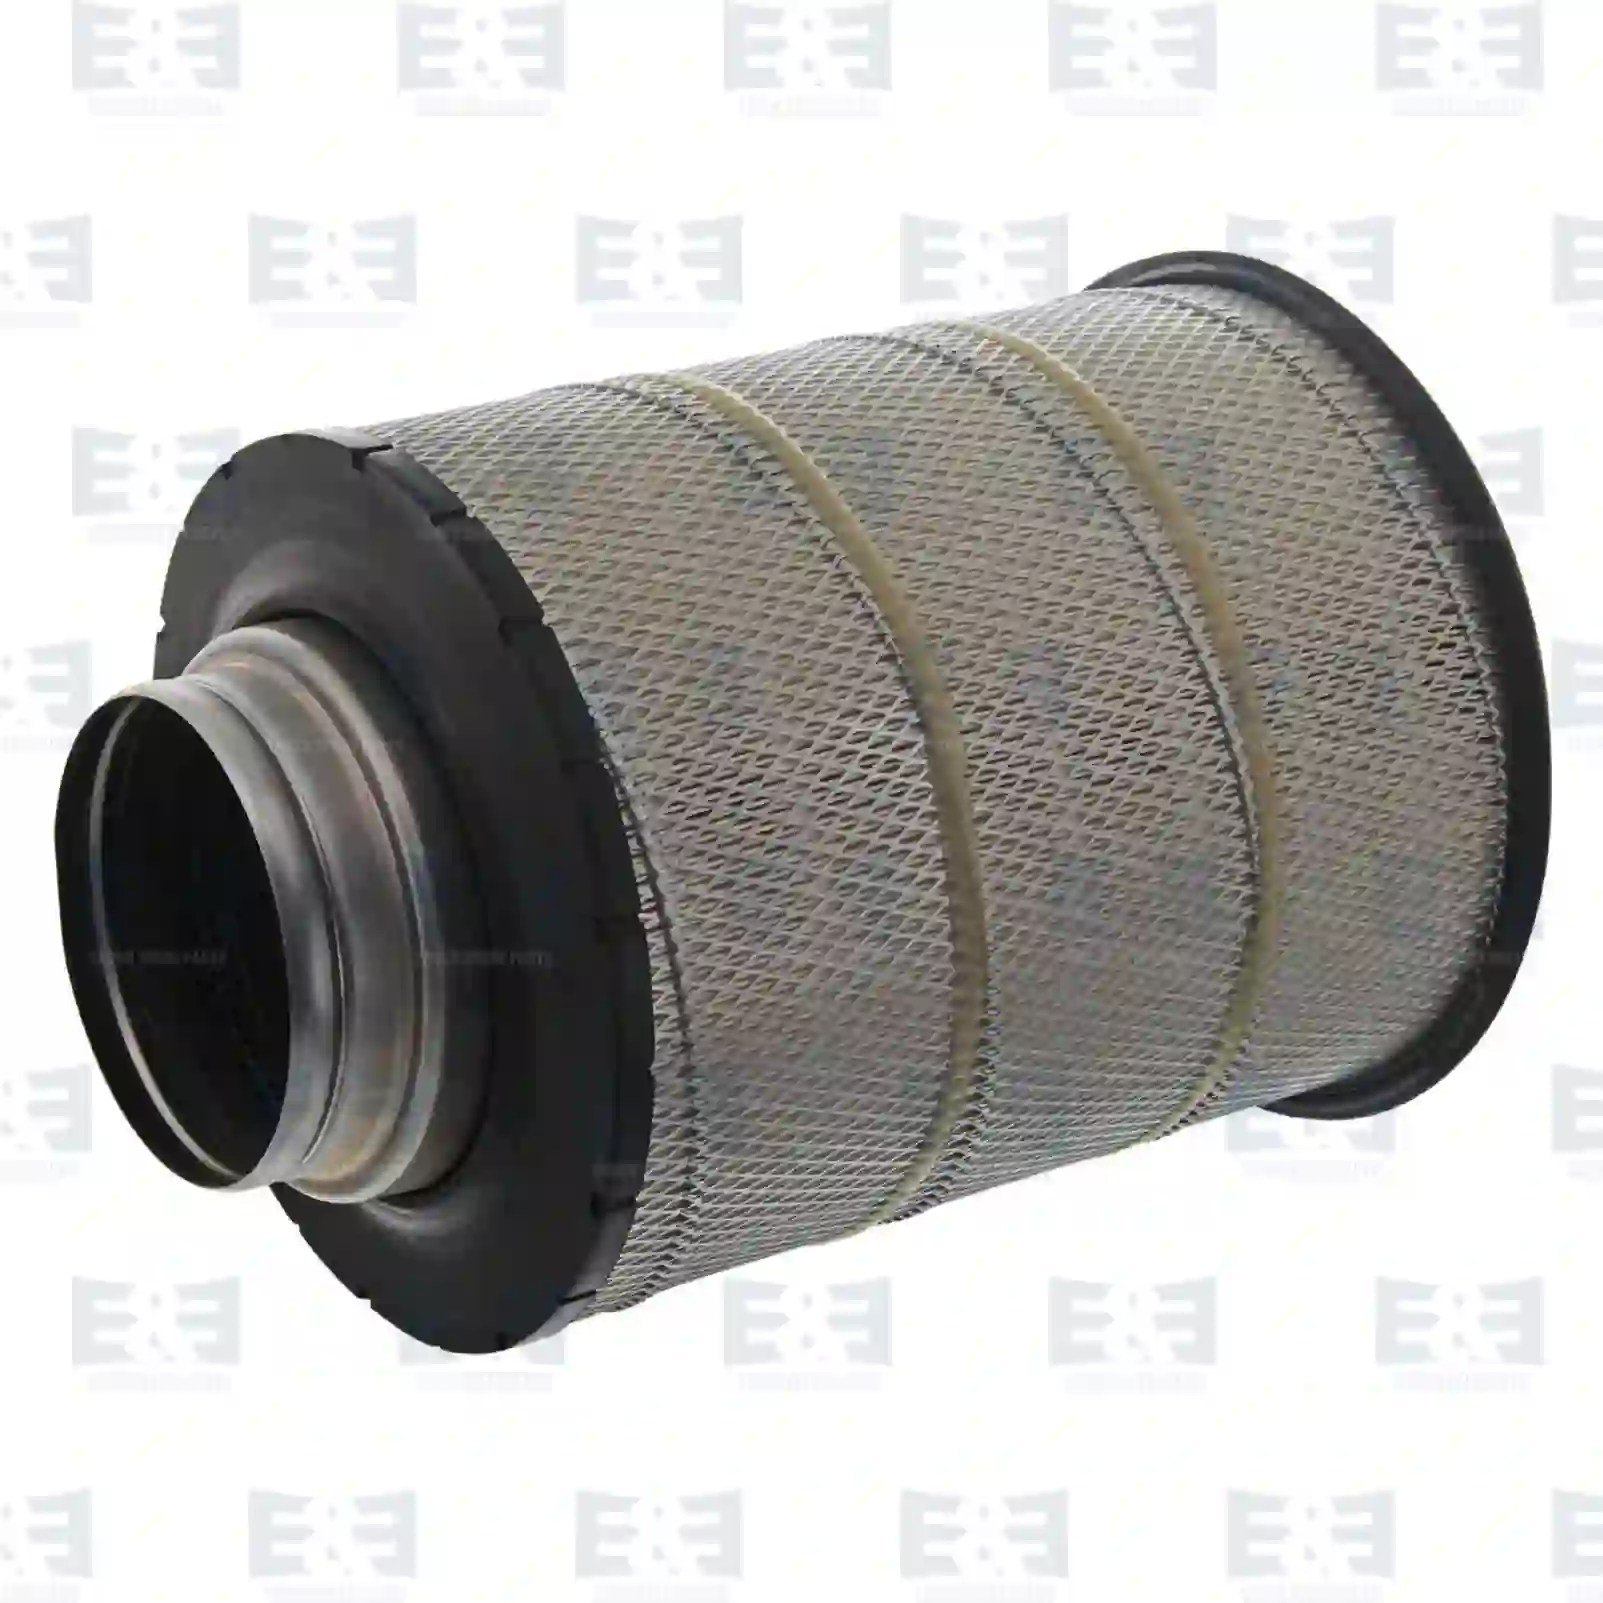  Air filter kit || E&E Truck Spare Parts | Truck Spare Parts, Auotomotive Spare Parts